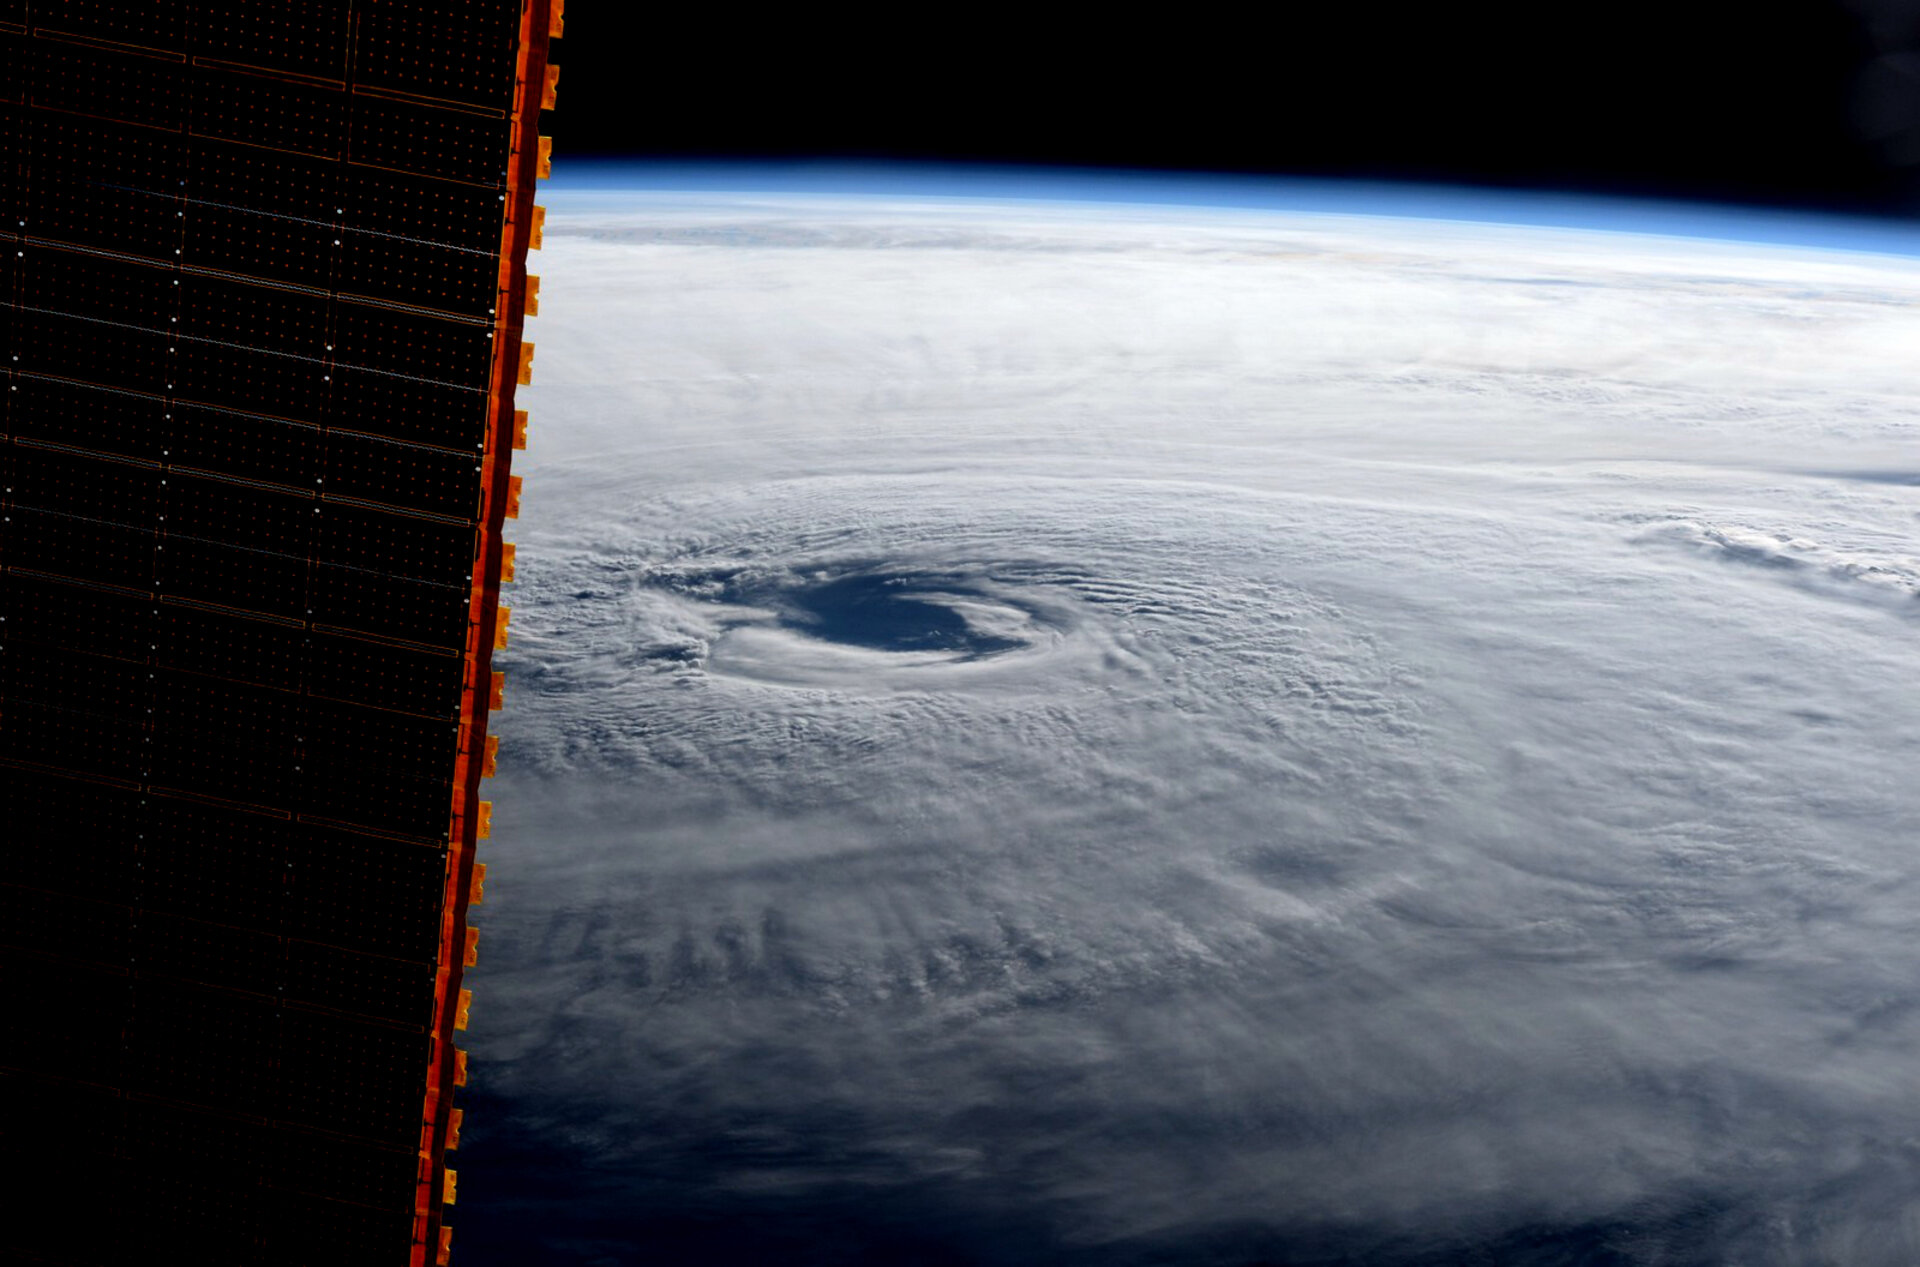 hurricane maria data science case study answer key